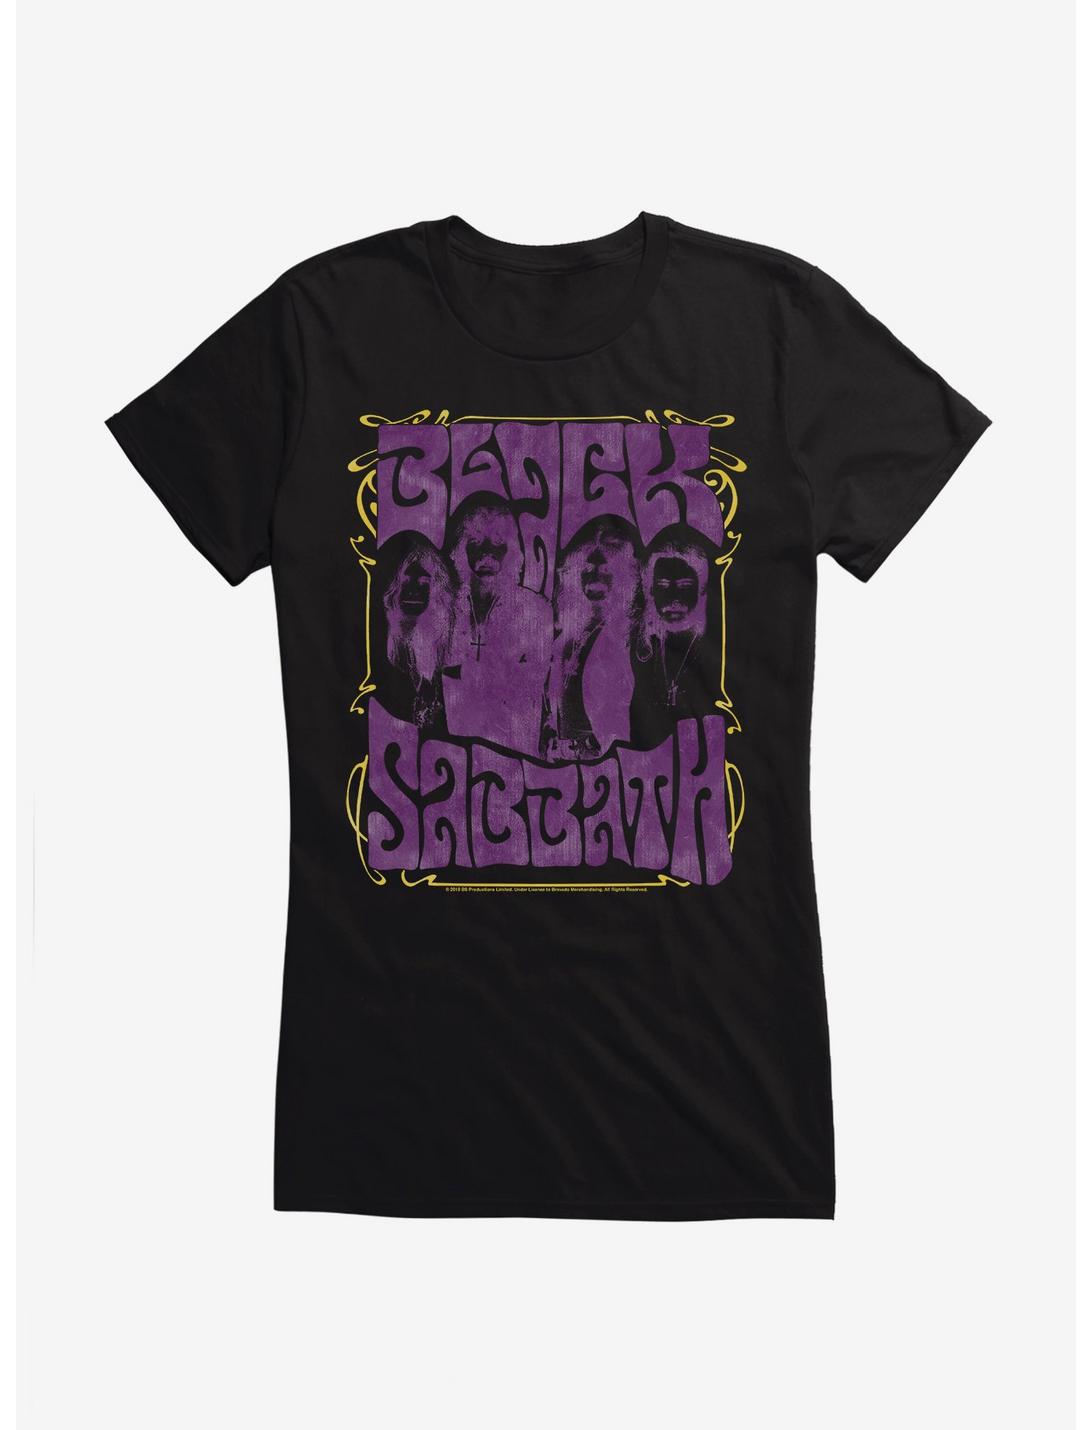 Black Sabbath Groovy Group Girls T-Shirt, BLACK, hi-res